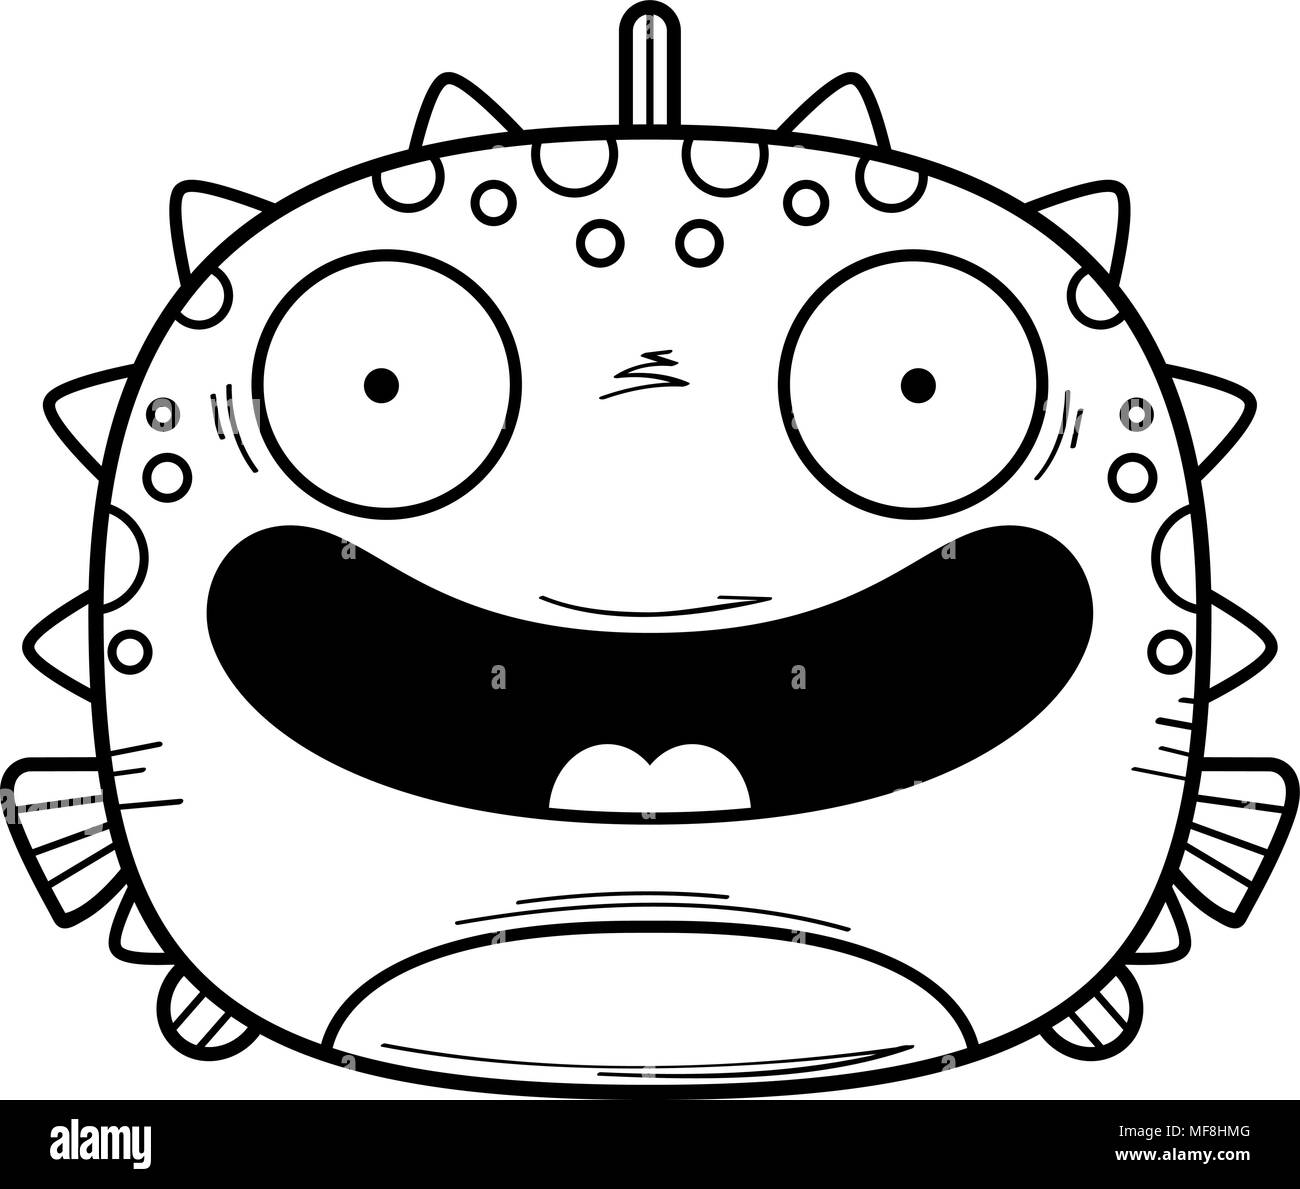 A cartoon illustration of a blowfish smiling. Stock Vector